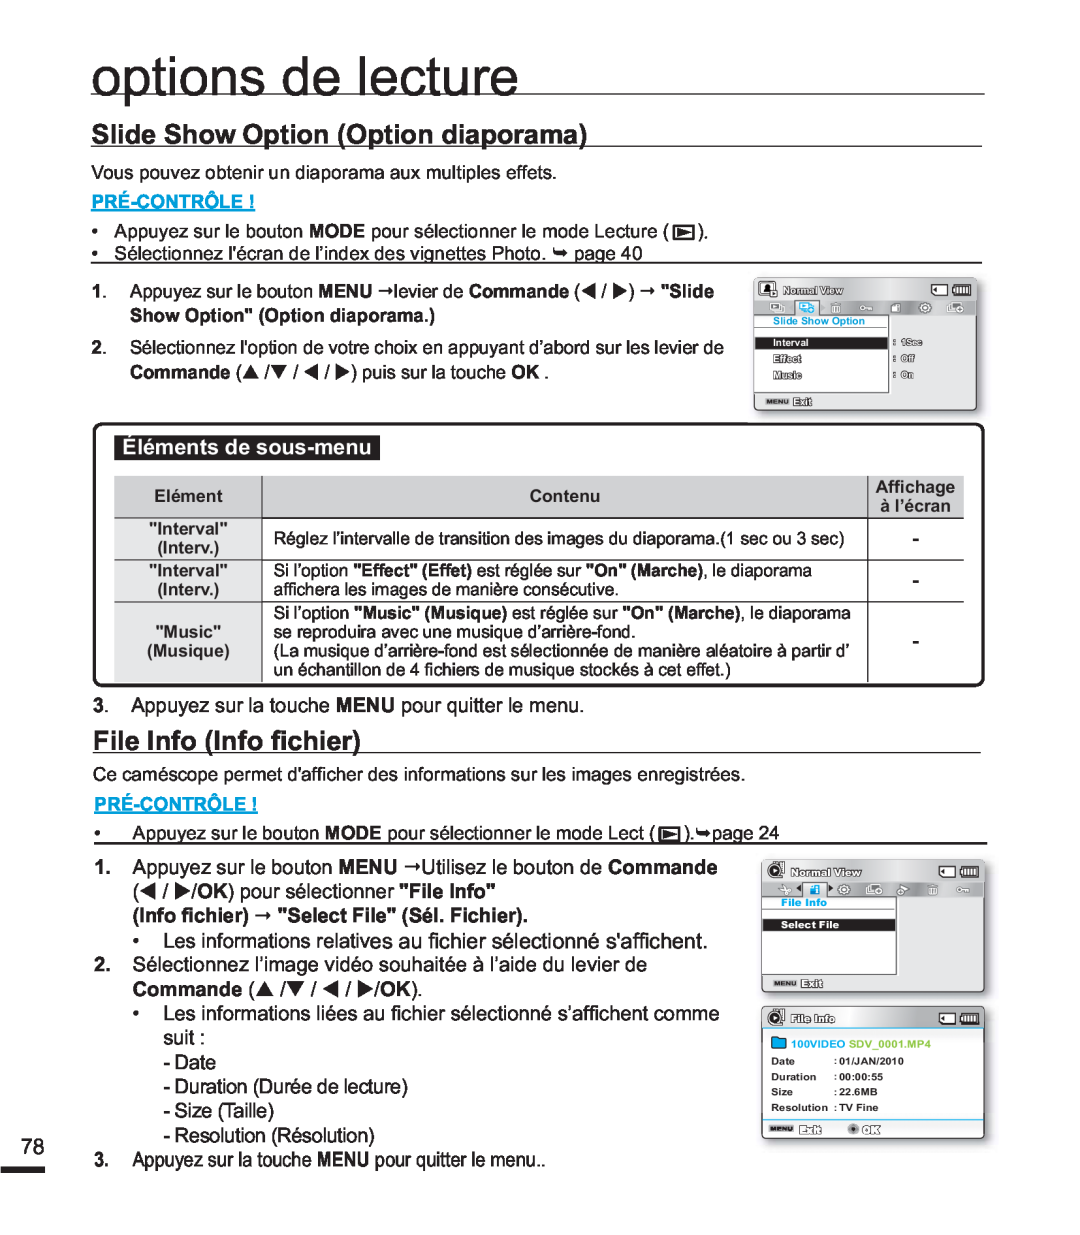 Samsung SMX-F400RP/EDC manual Slide Show Option Option diaporama, Loh,Qir,Qir¿Fklhu, options de lecture, Pré-Contrôle 